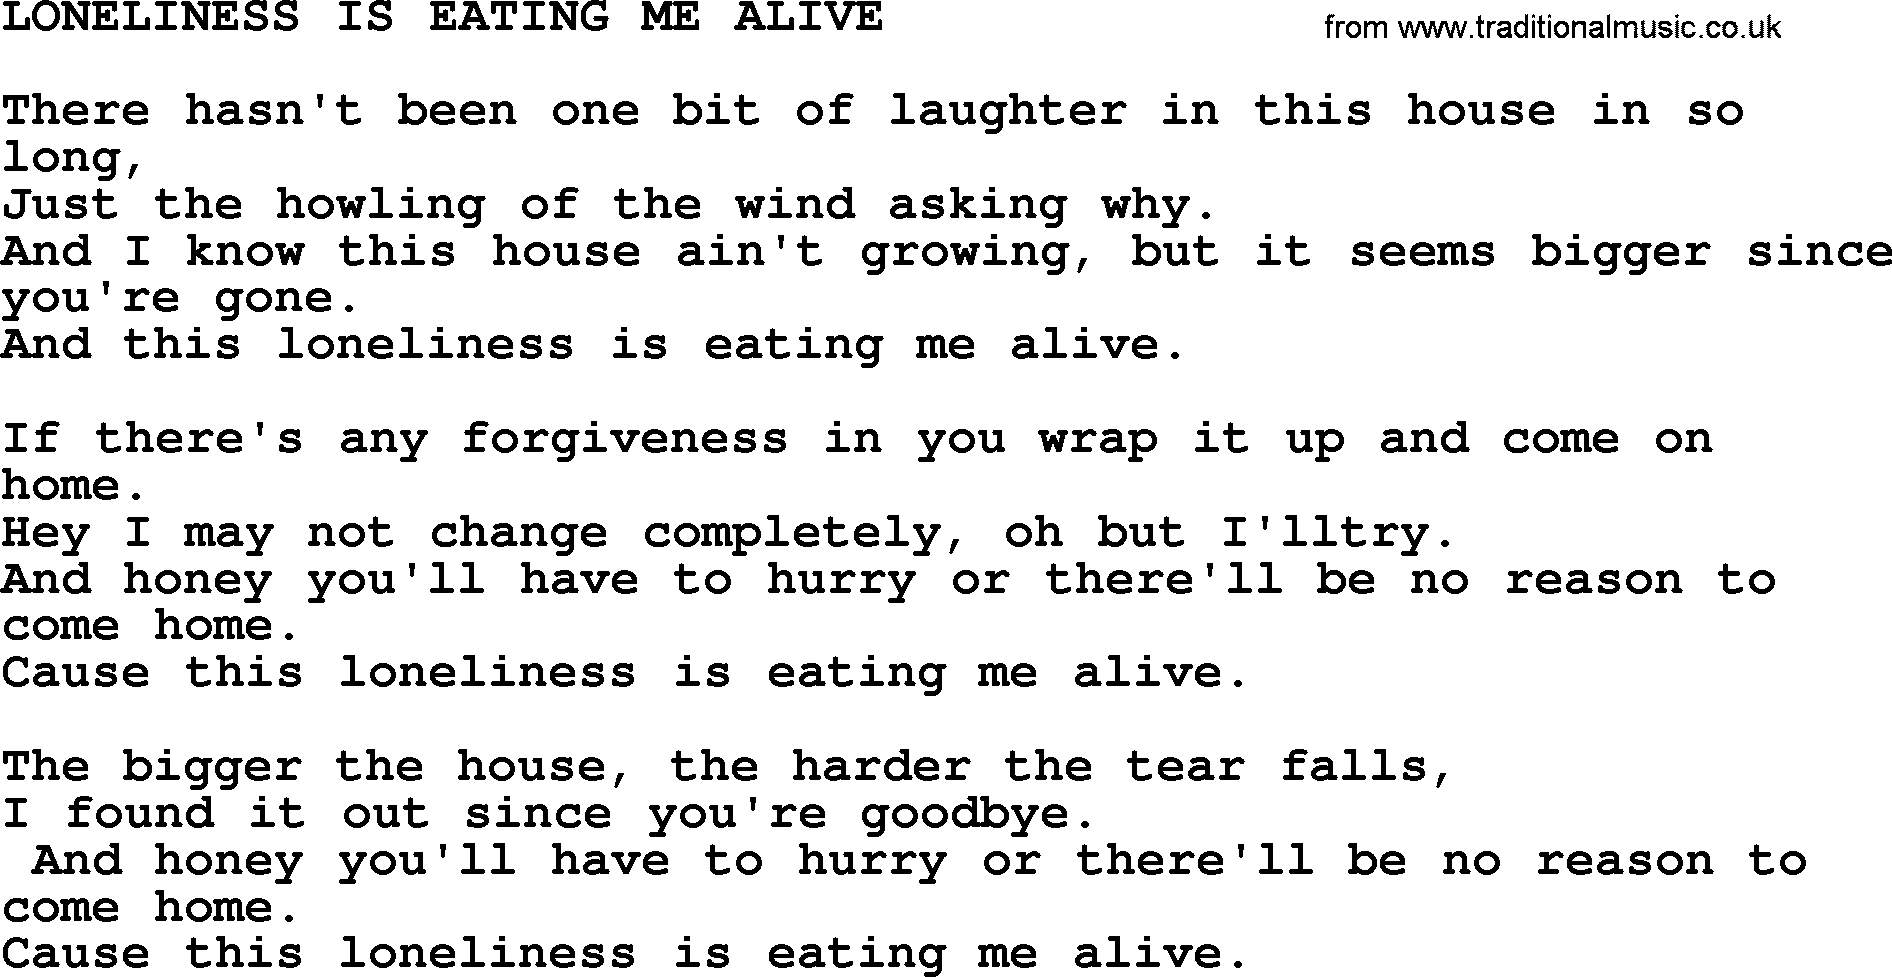 Merle Haggard song: Loneliness Is Eating Me Alive, lyrics.